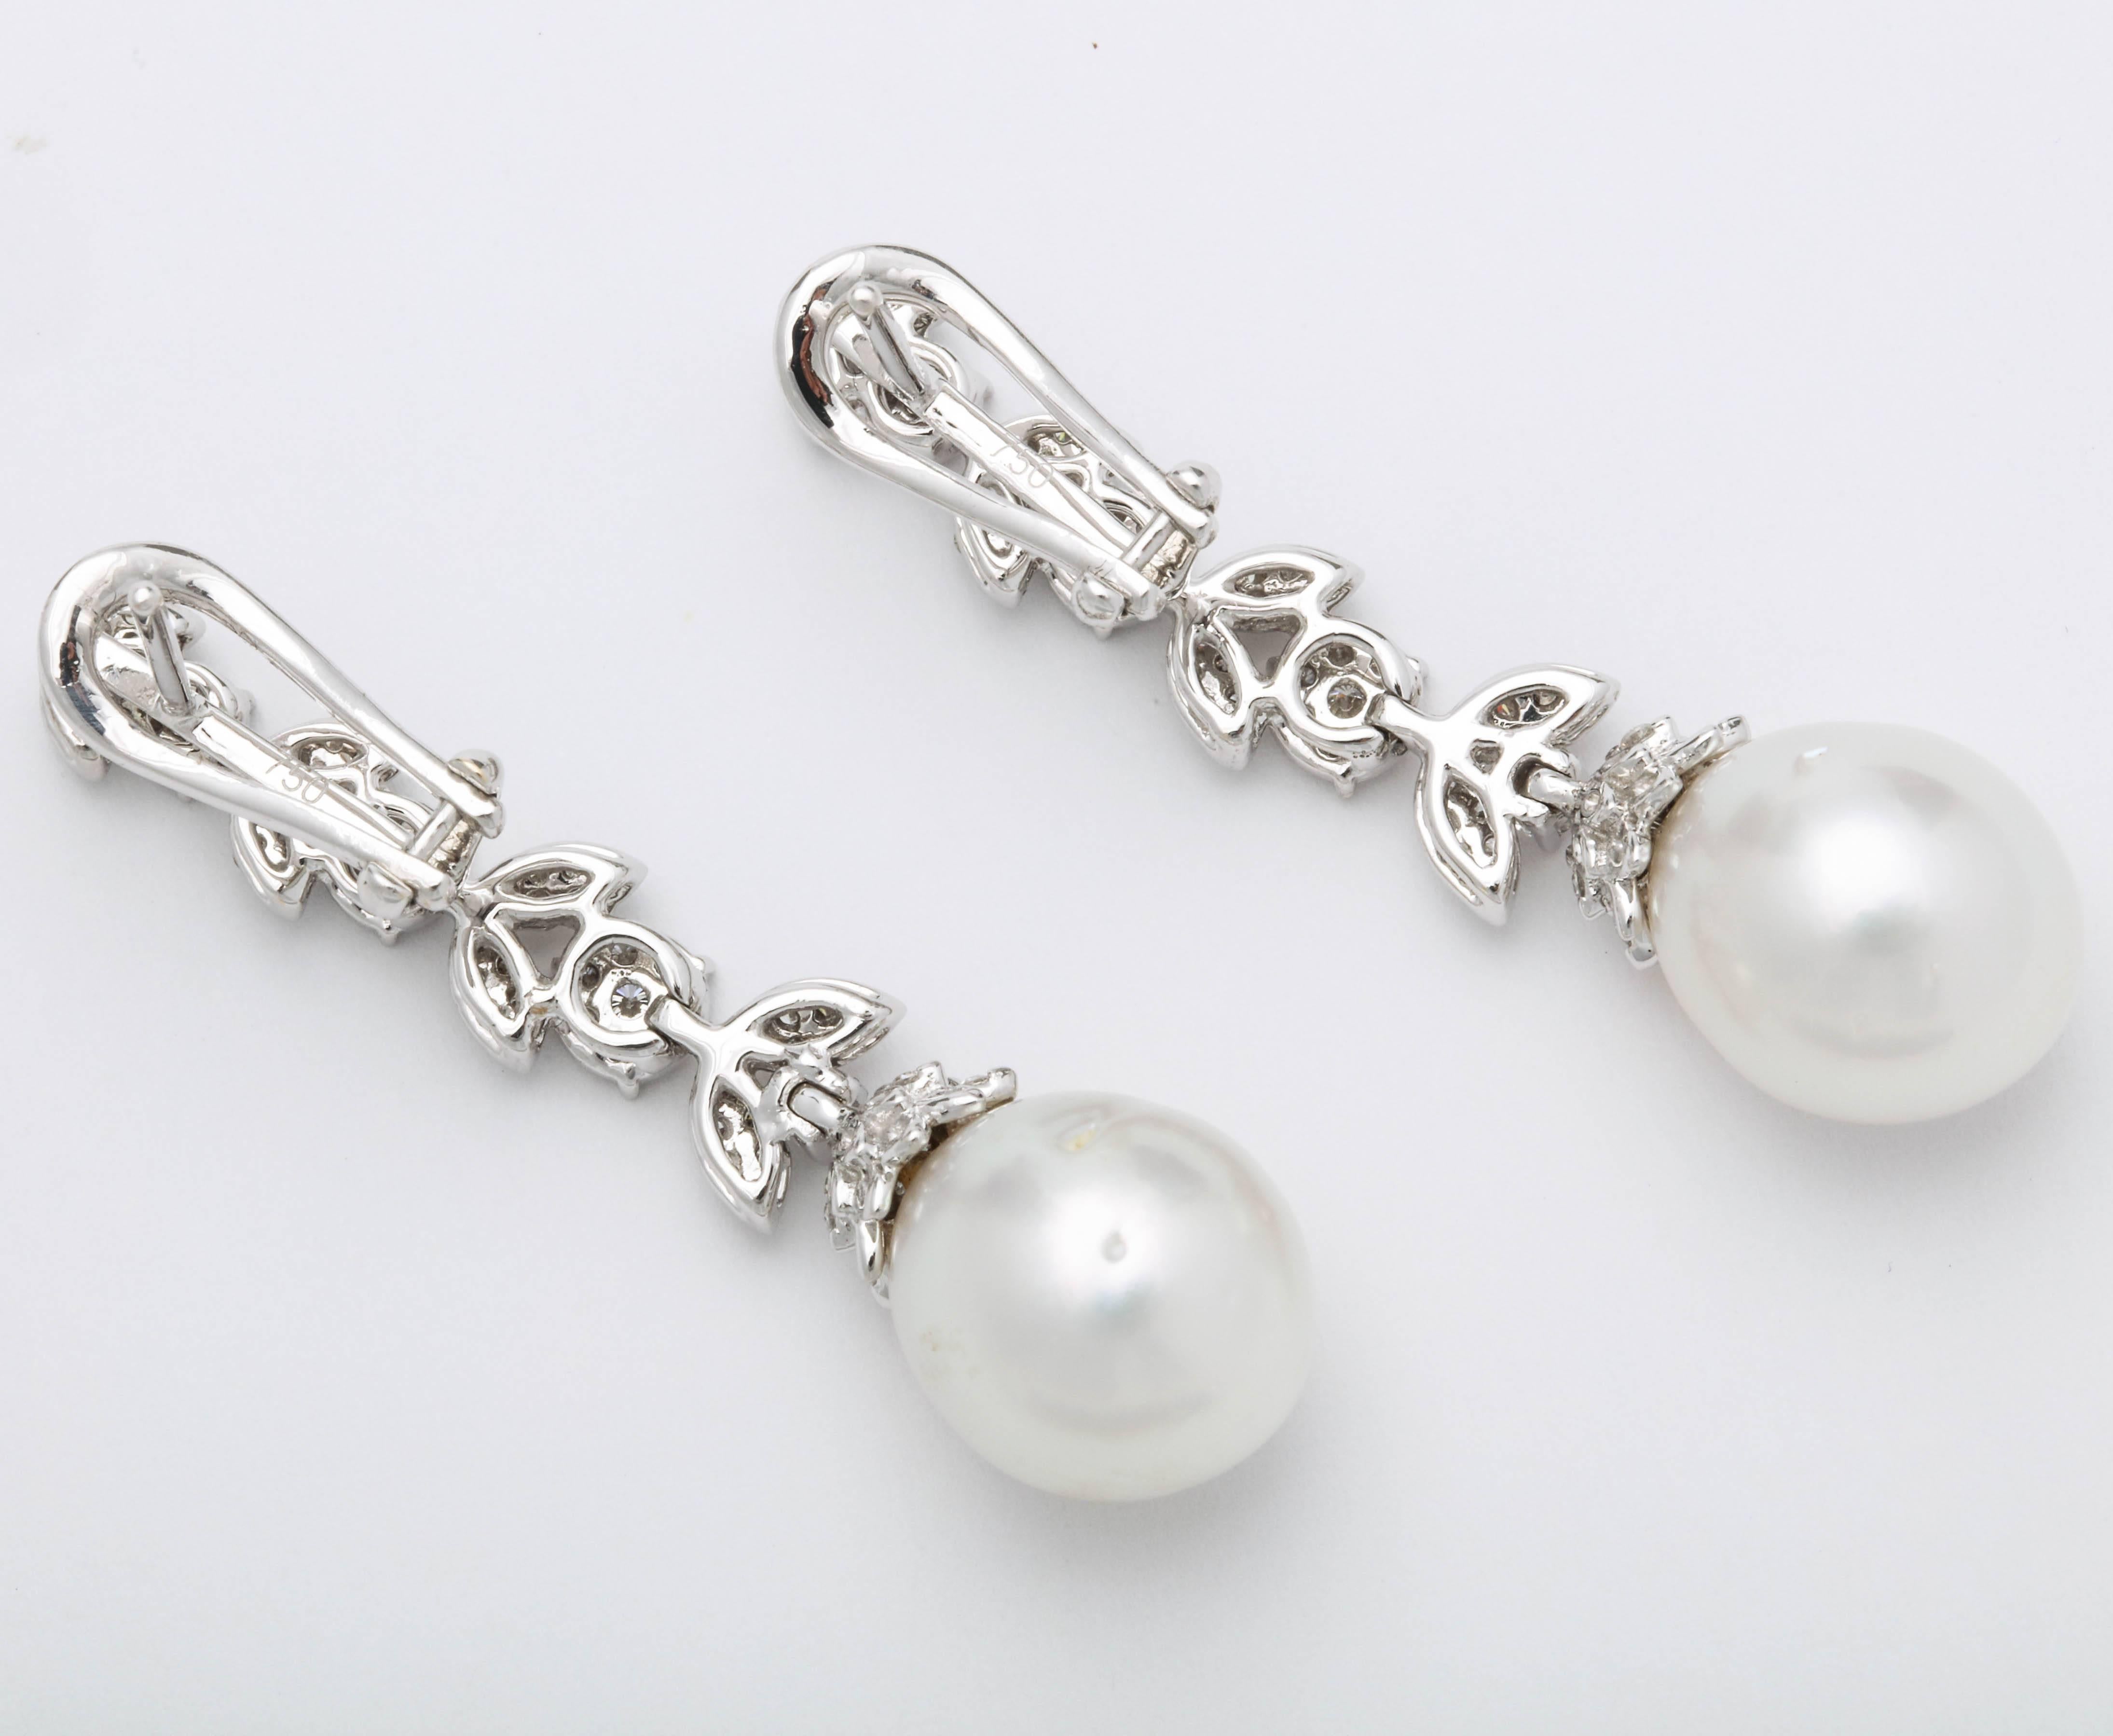 diamond and pearl earrings